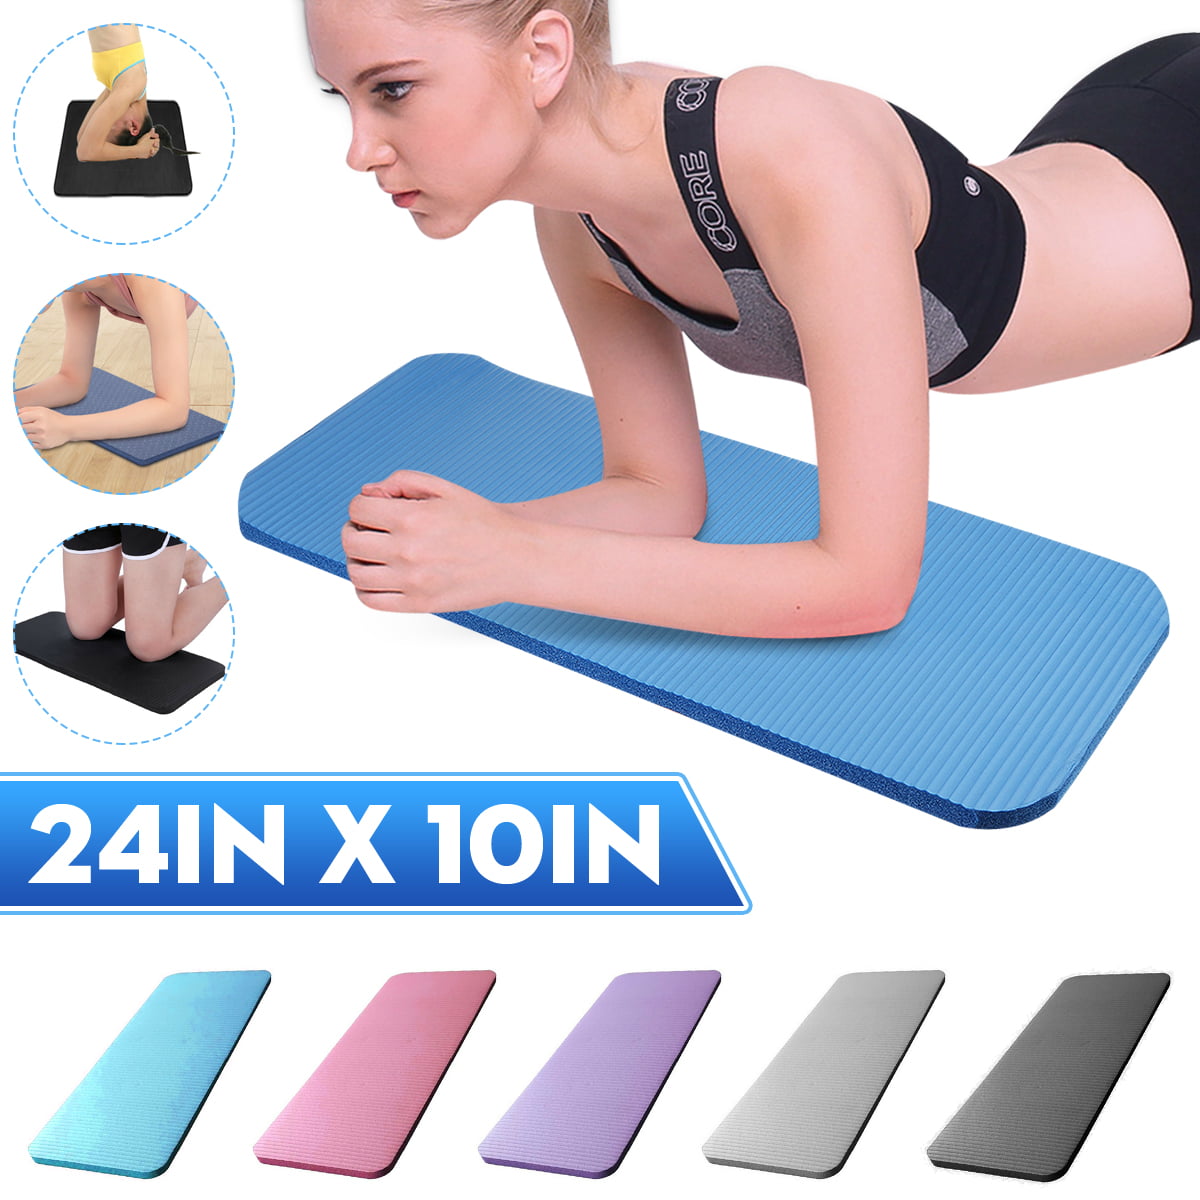 Thick Yoga Mat Exercise Fitness Camping Pilates Pad Meditation Gym Non-Slip Good 